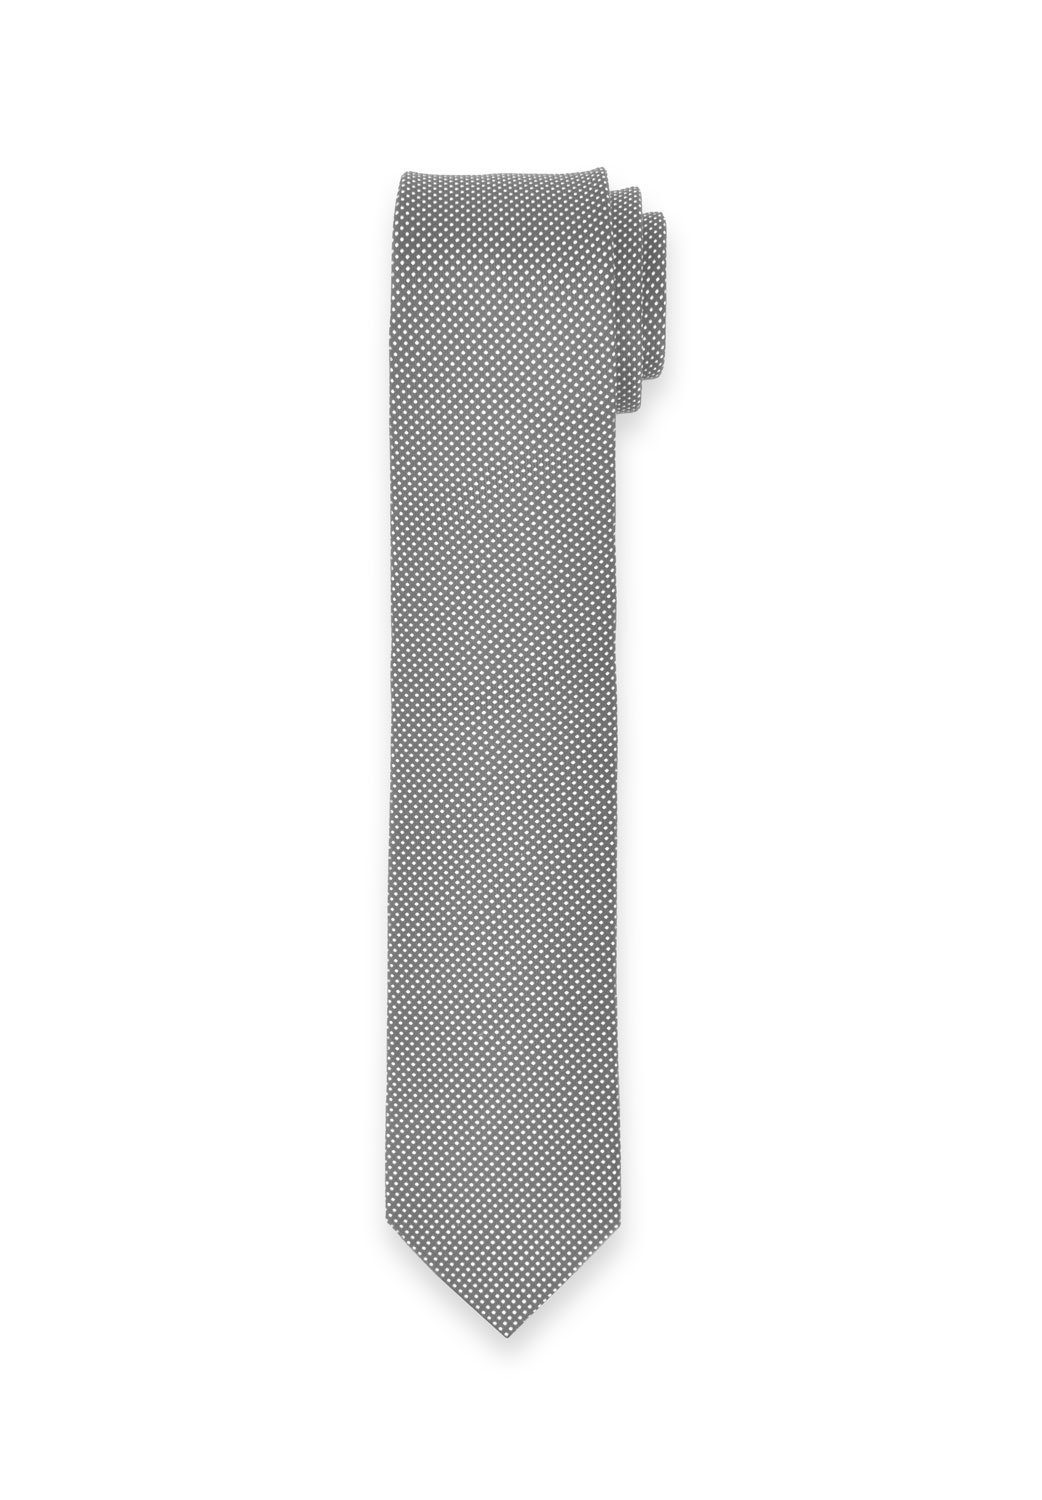 MARVELIS Krawatte Krawatte - Punkte - Grau/Weiß - 6,5 cm